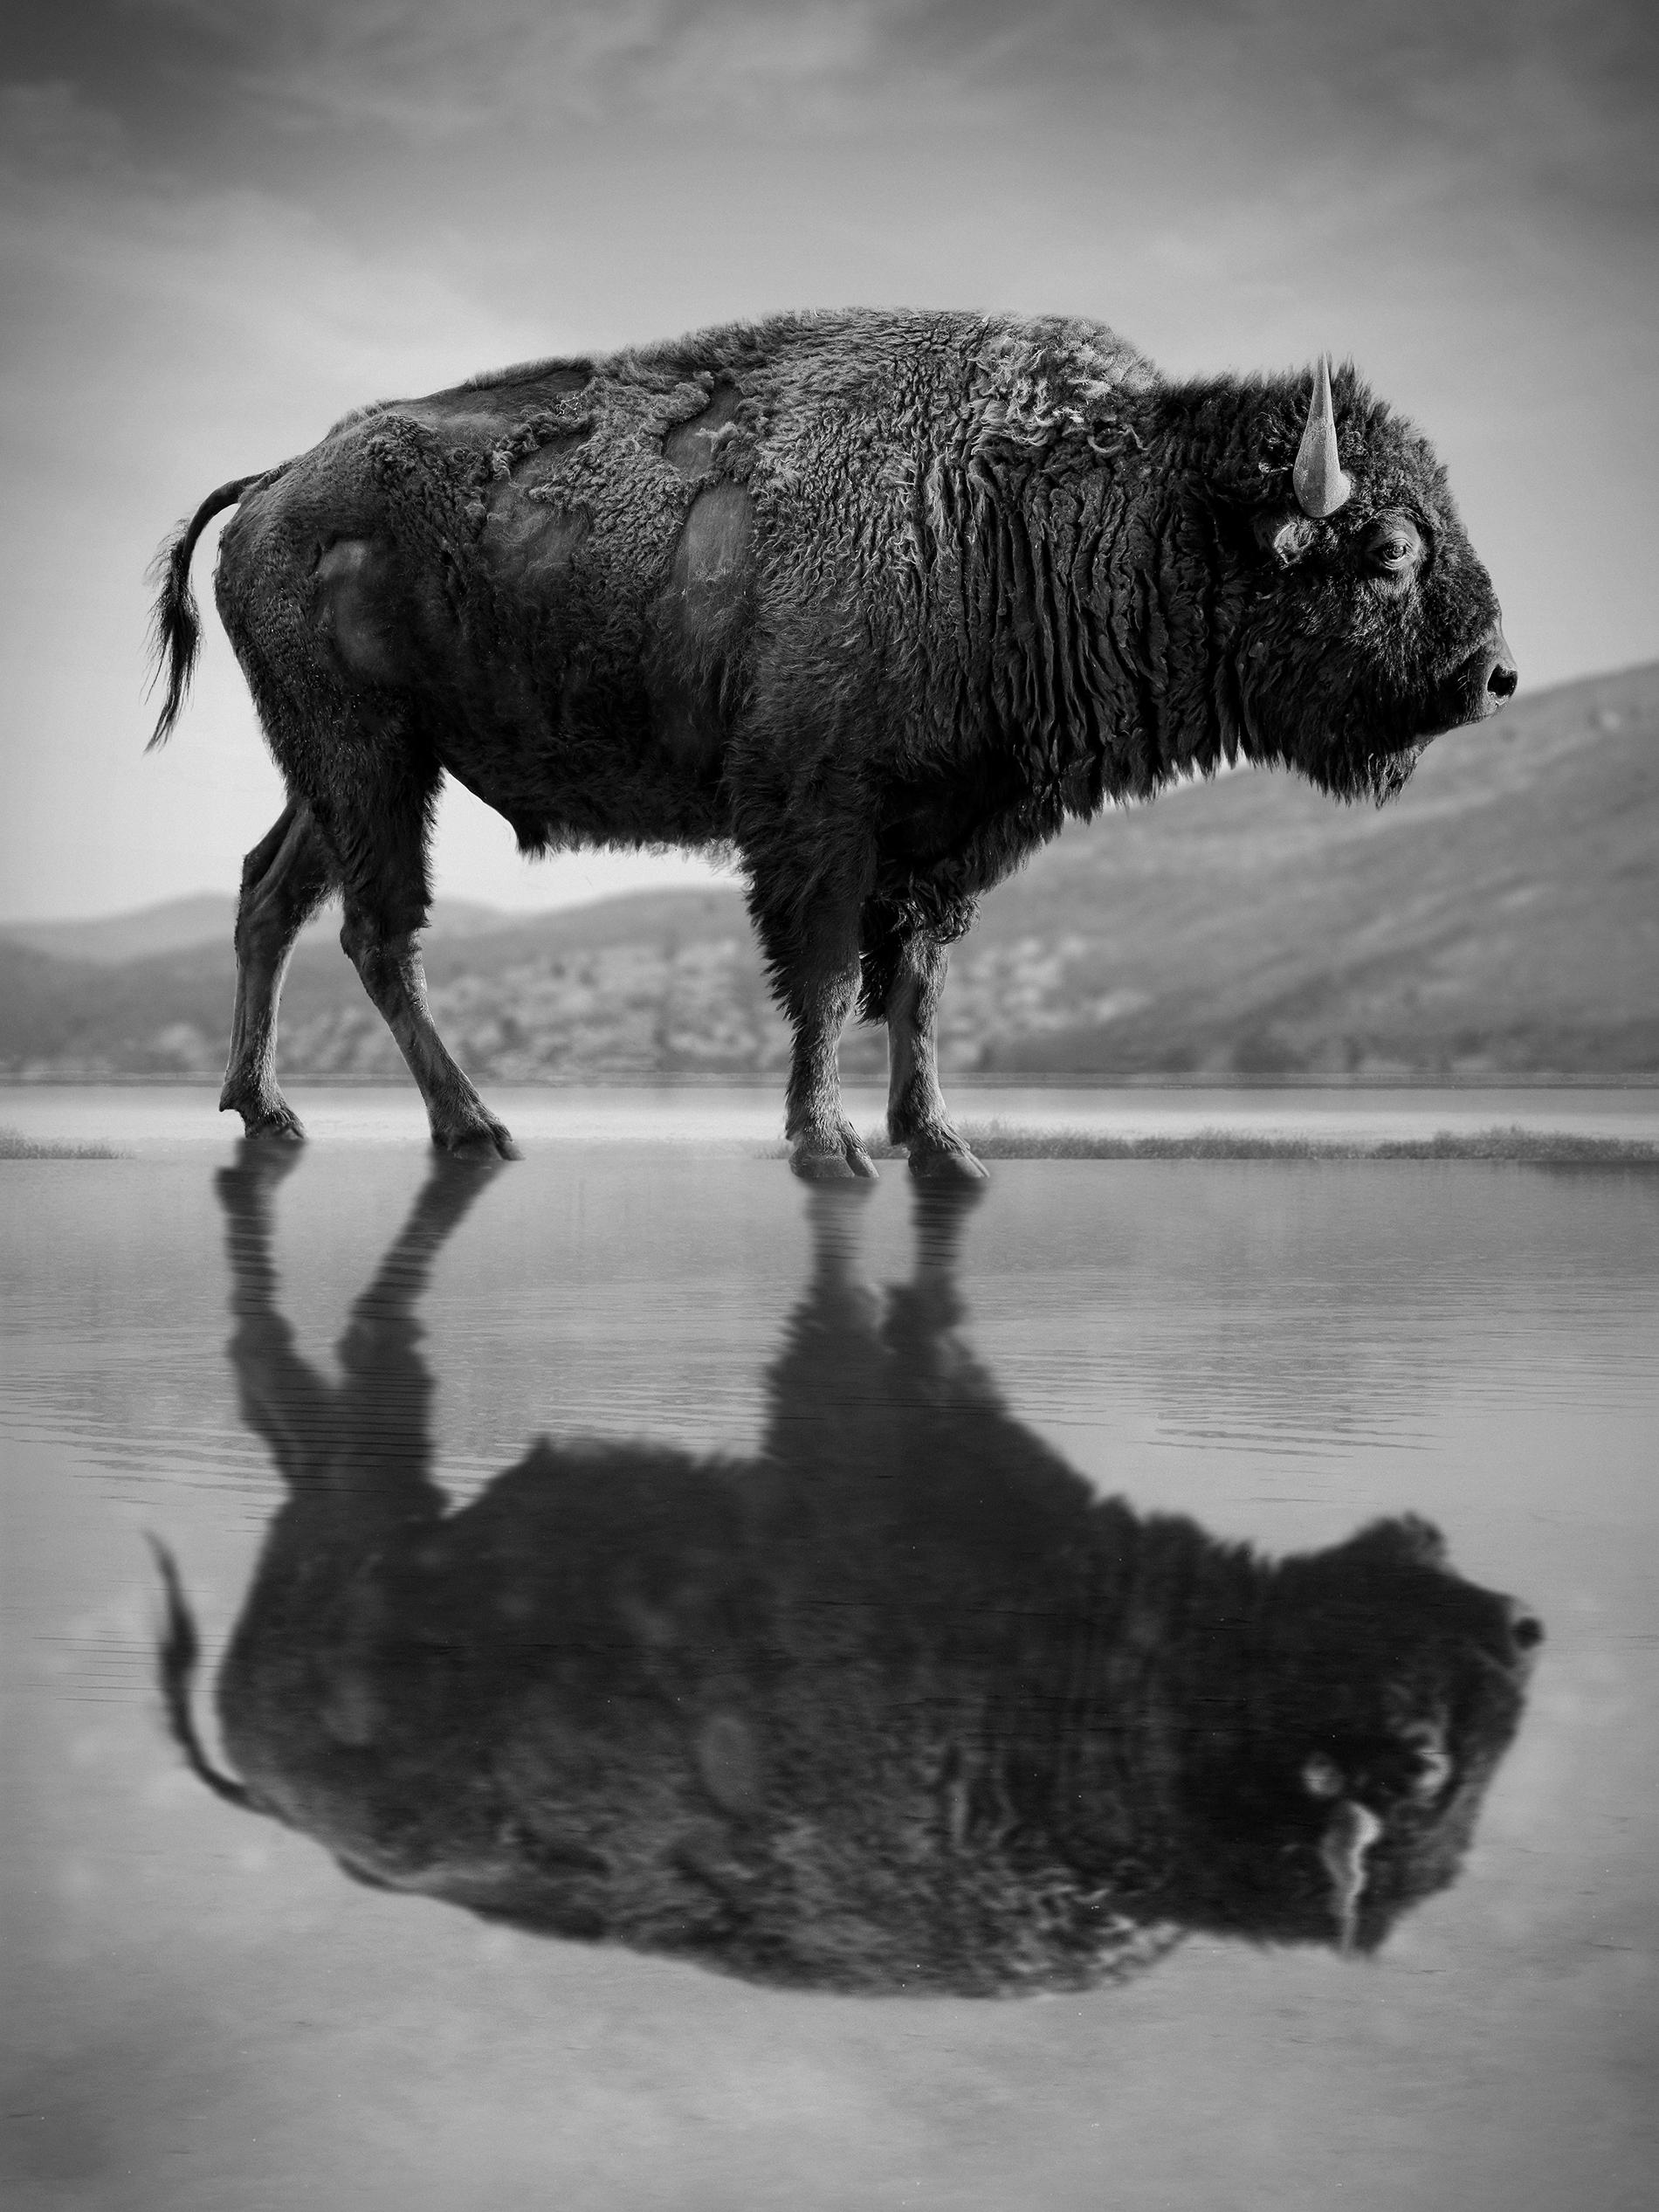 Animal Print Shane Russeck - Photographie "Old World" Noir et Blanc Bison 48x36 Photographie signée Buffalo